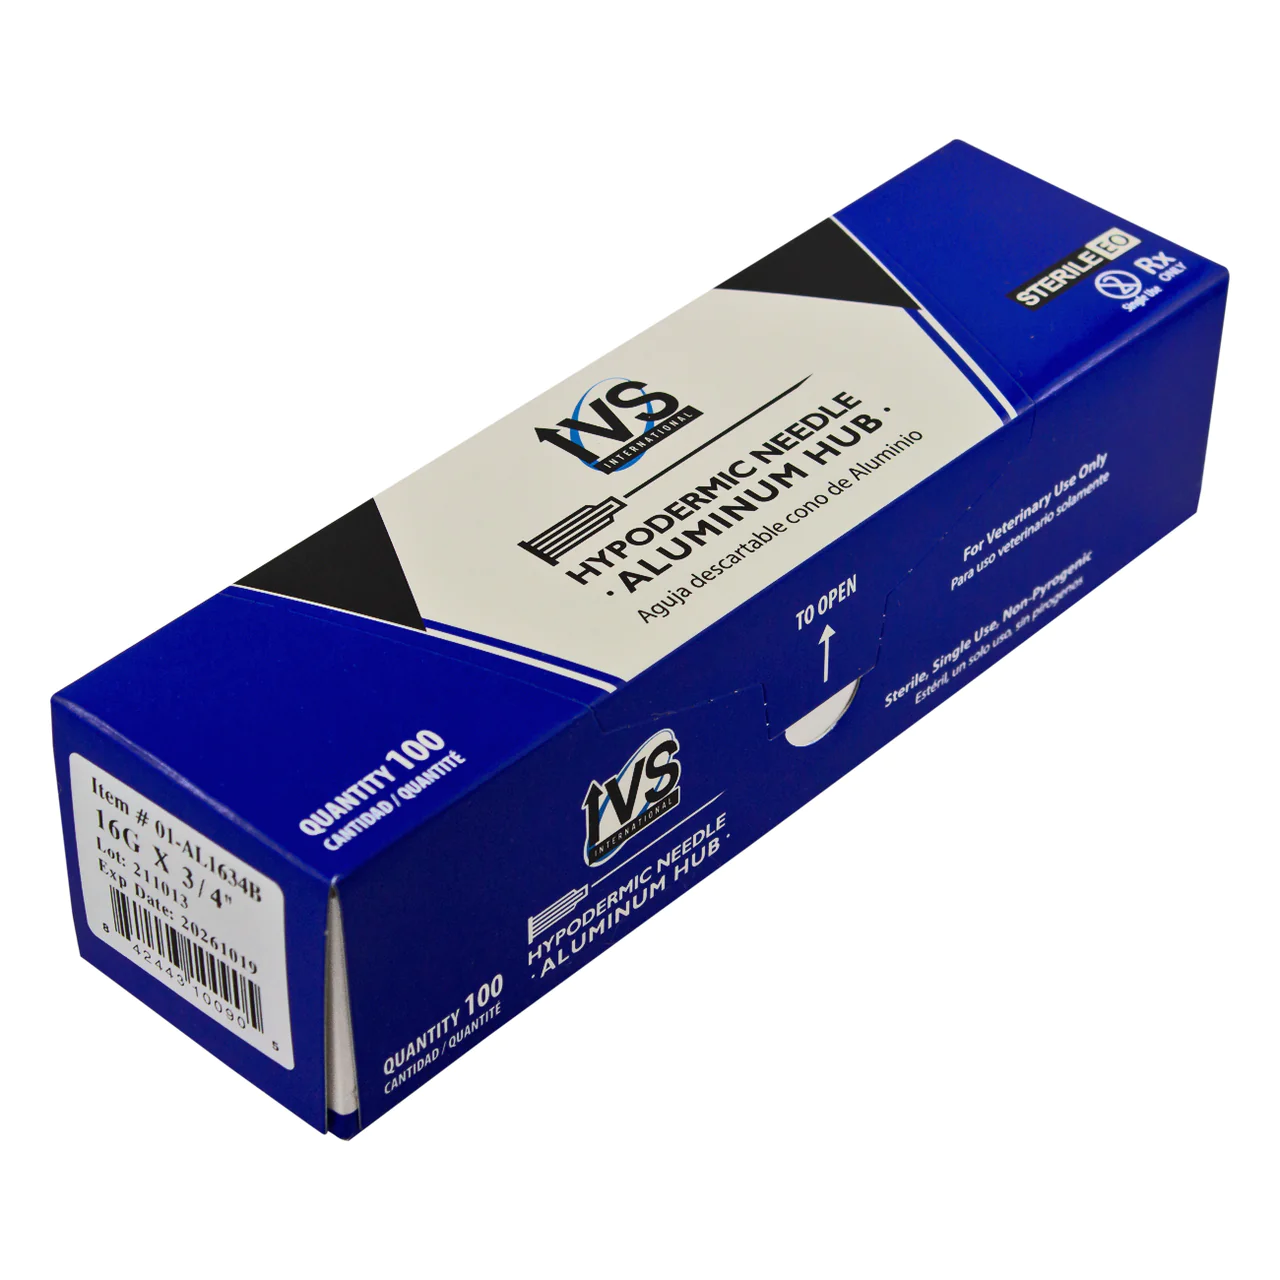 IVS Aluminum Hub Needle (100pk) - 16g x 3/4"